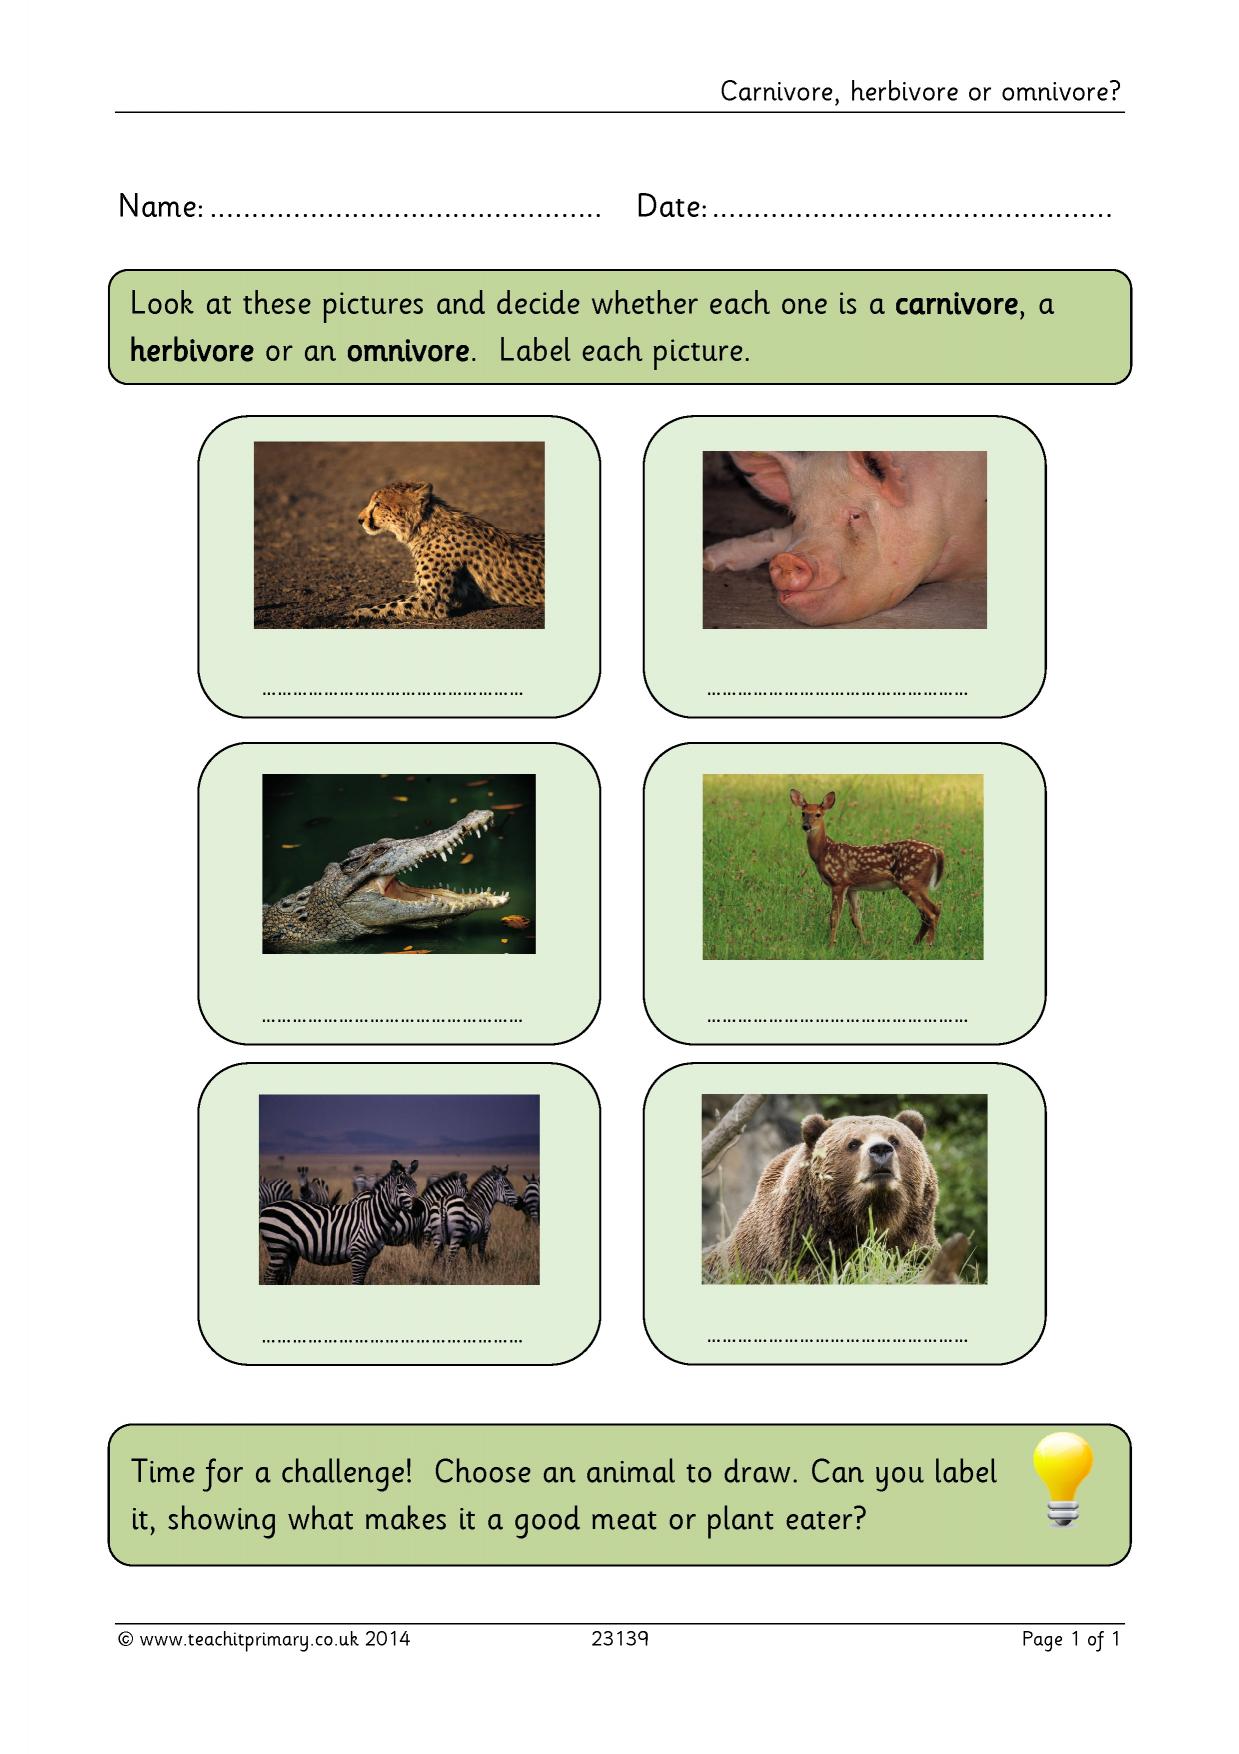 Carnivores, herbivores and omnivores | KS1 Science | Teachit